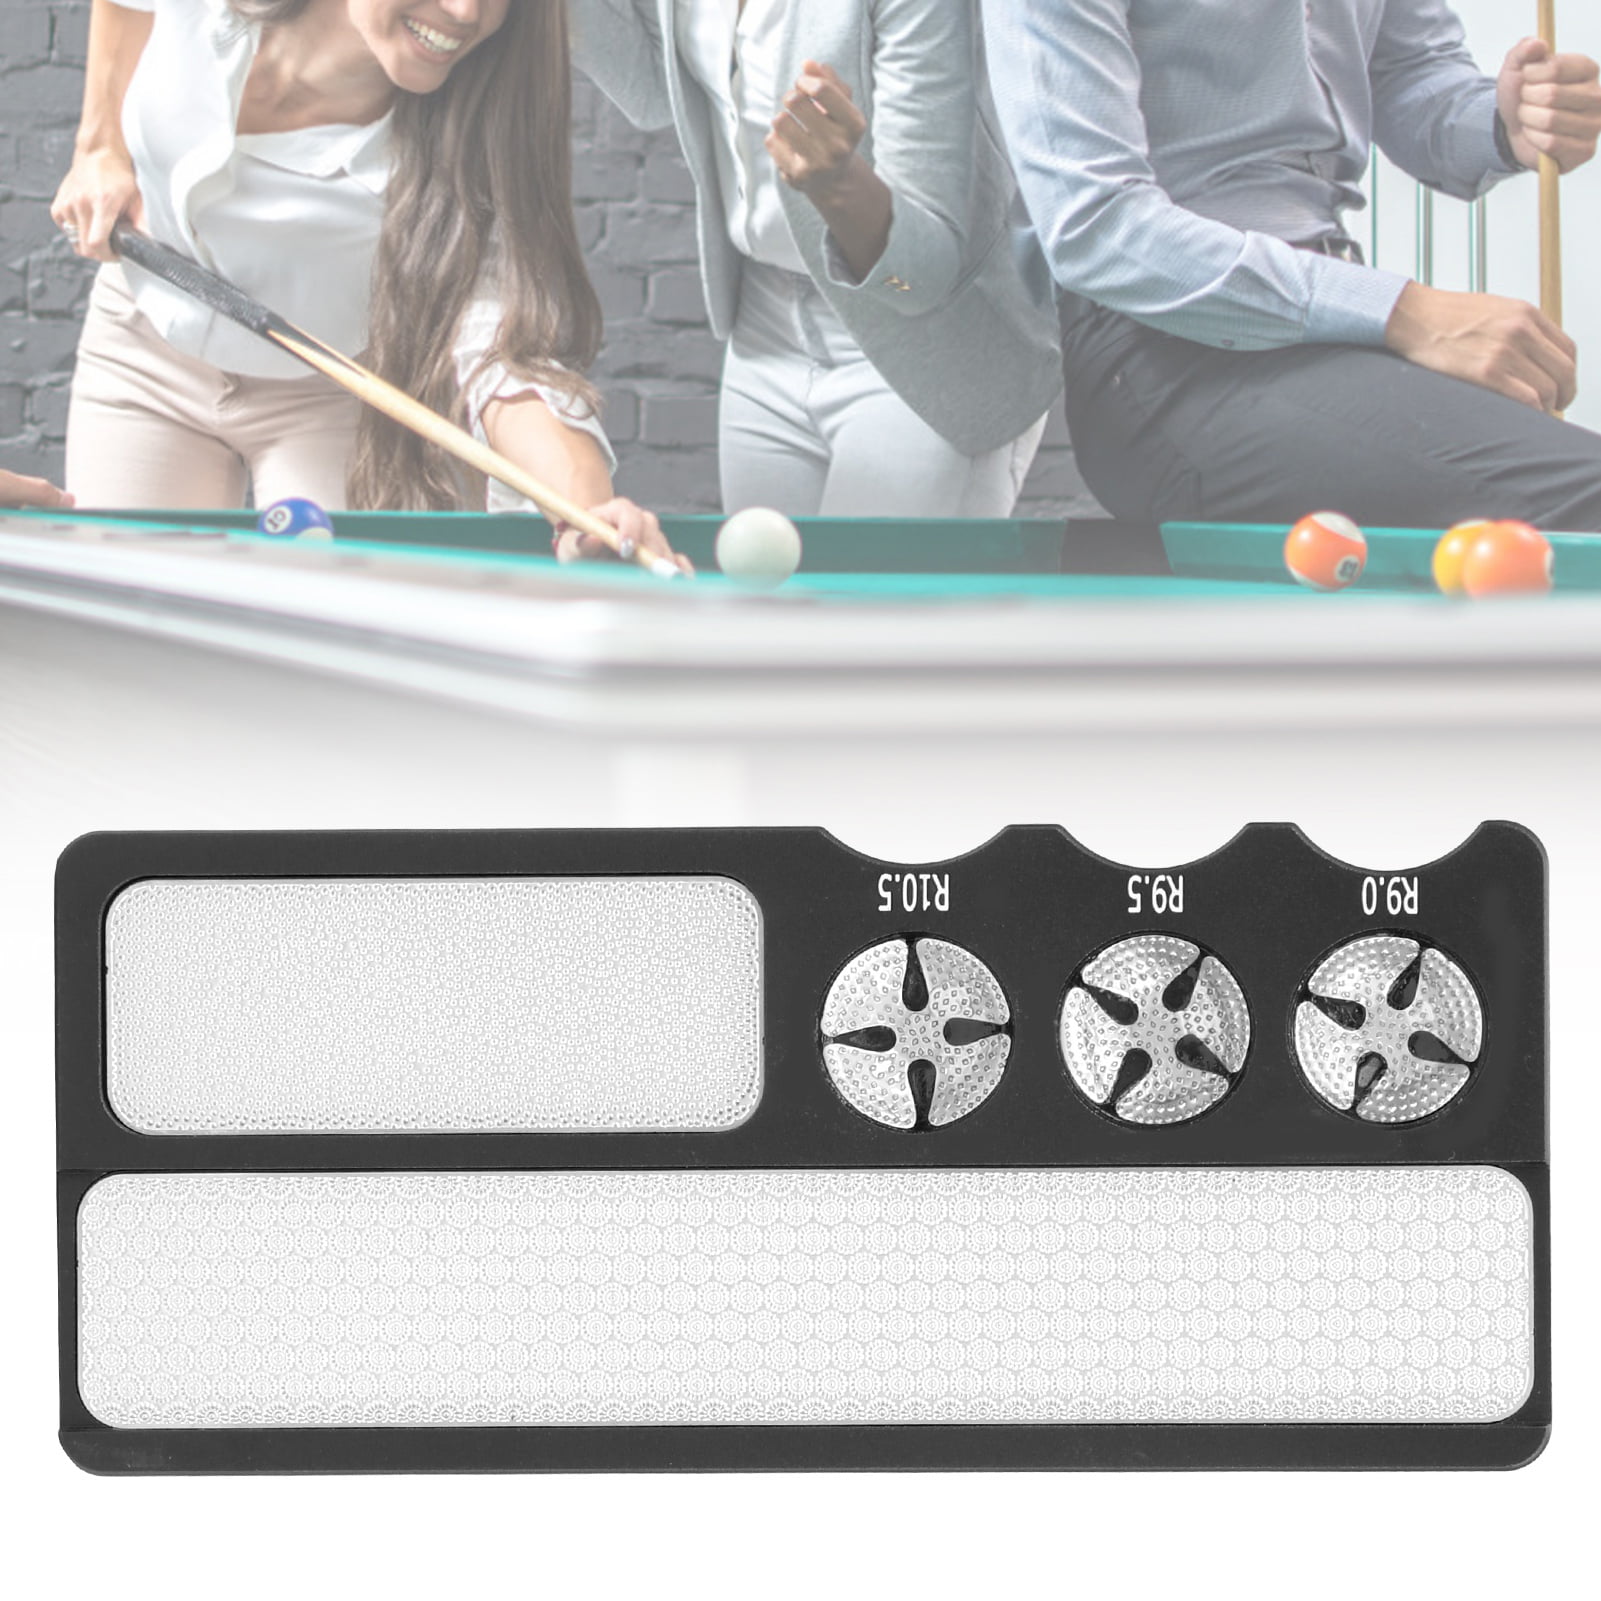 5 In 1 Portable Billiards Pool Trimmer Tip Pick Grinding Shaping Repair Tool 